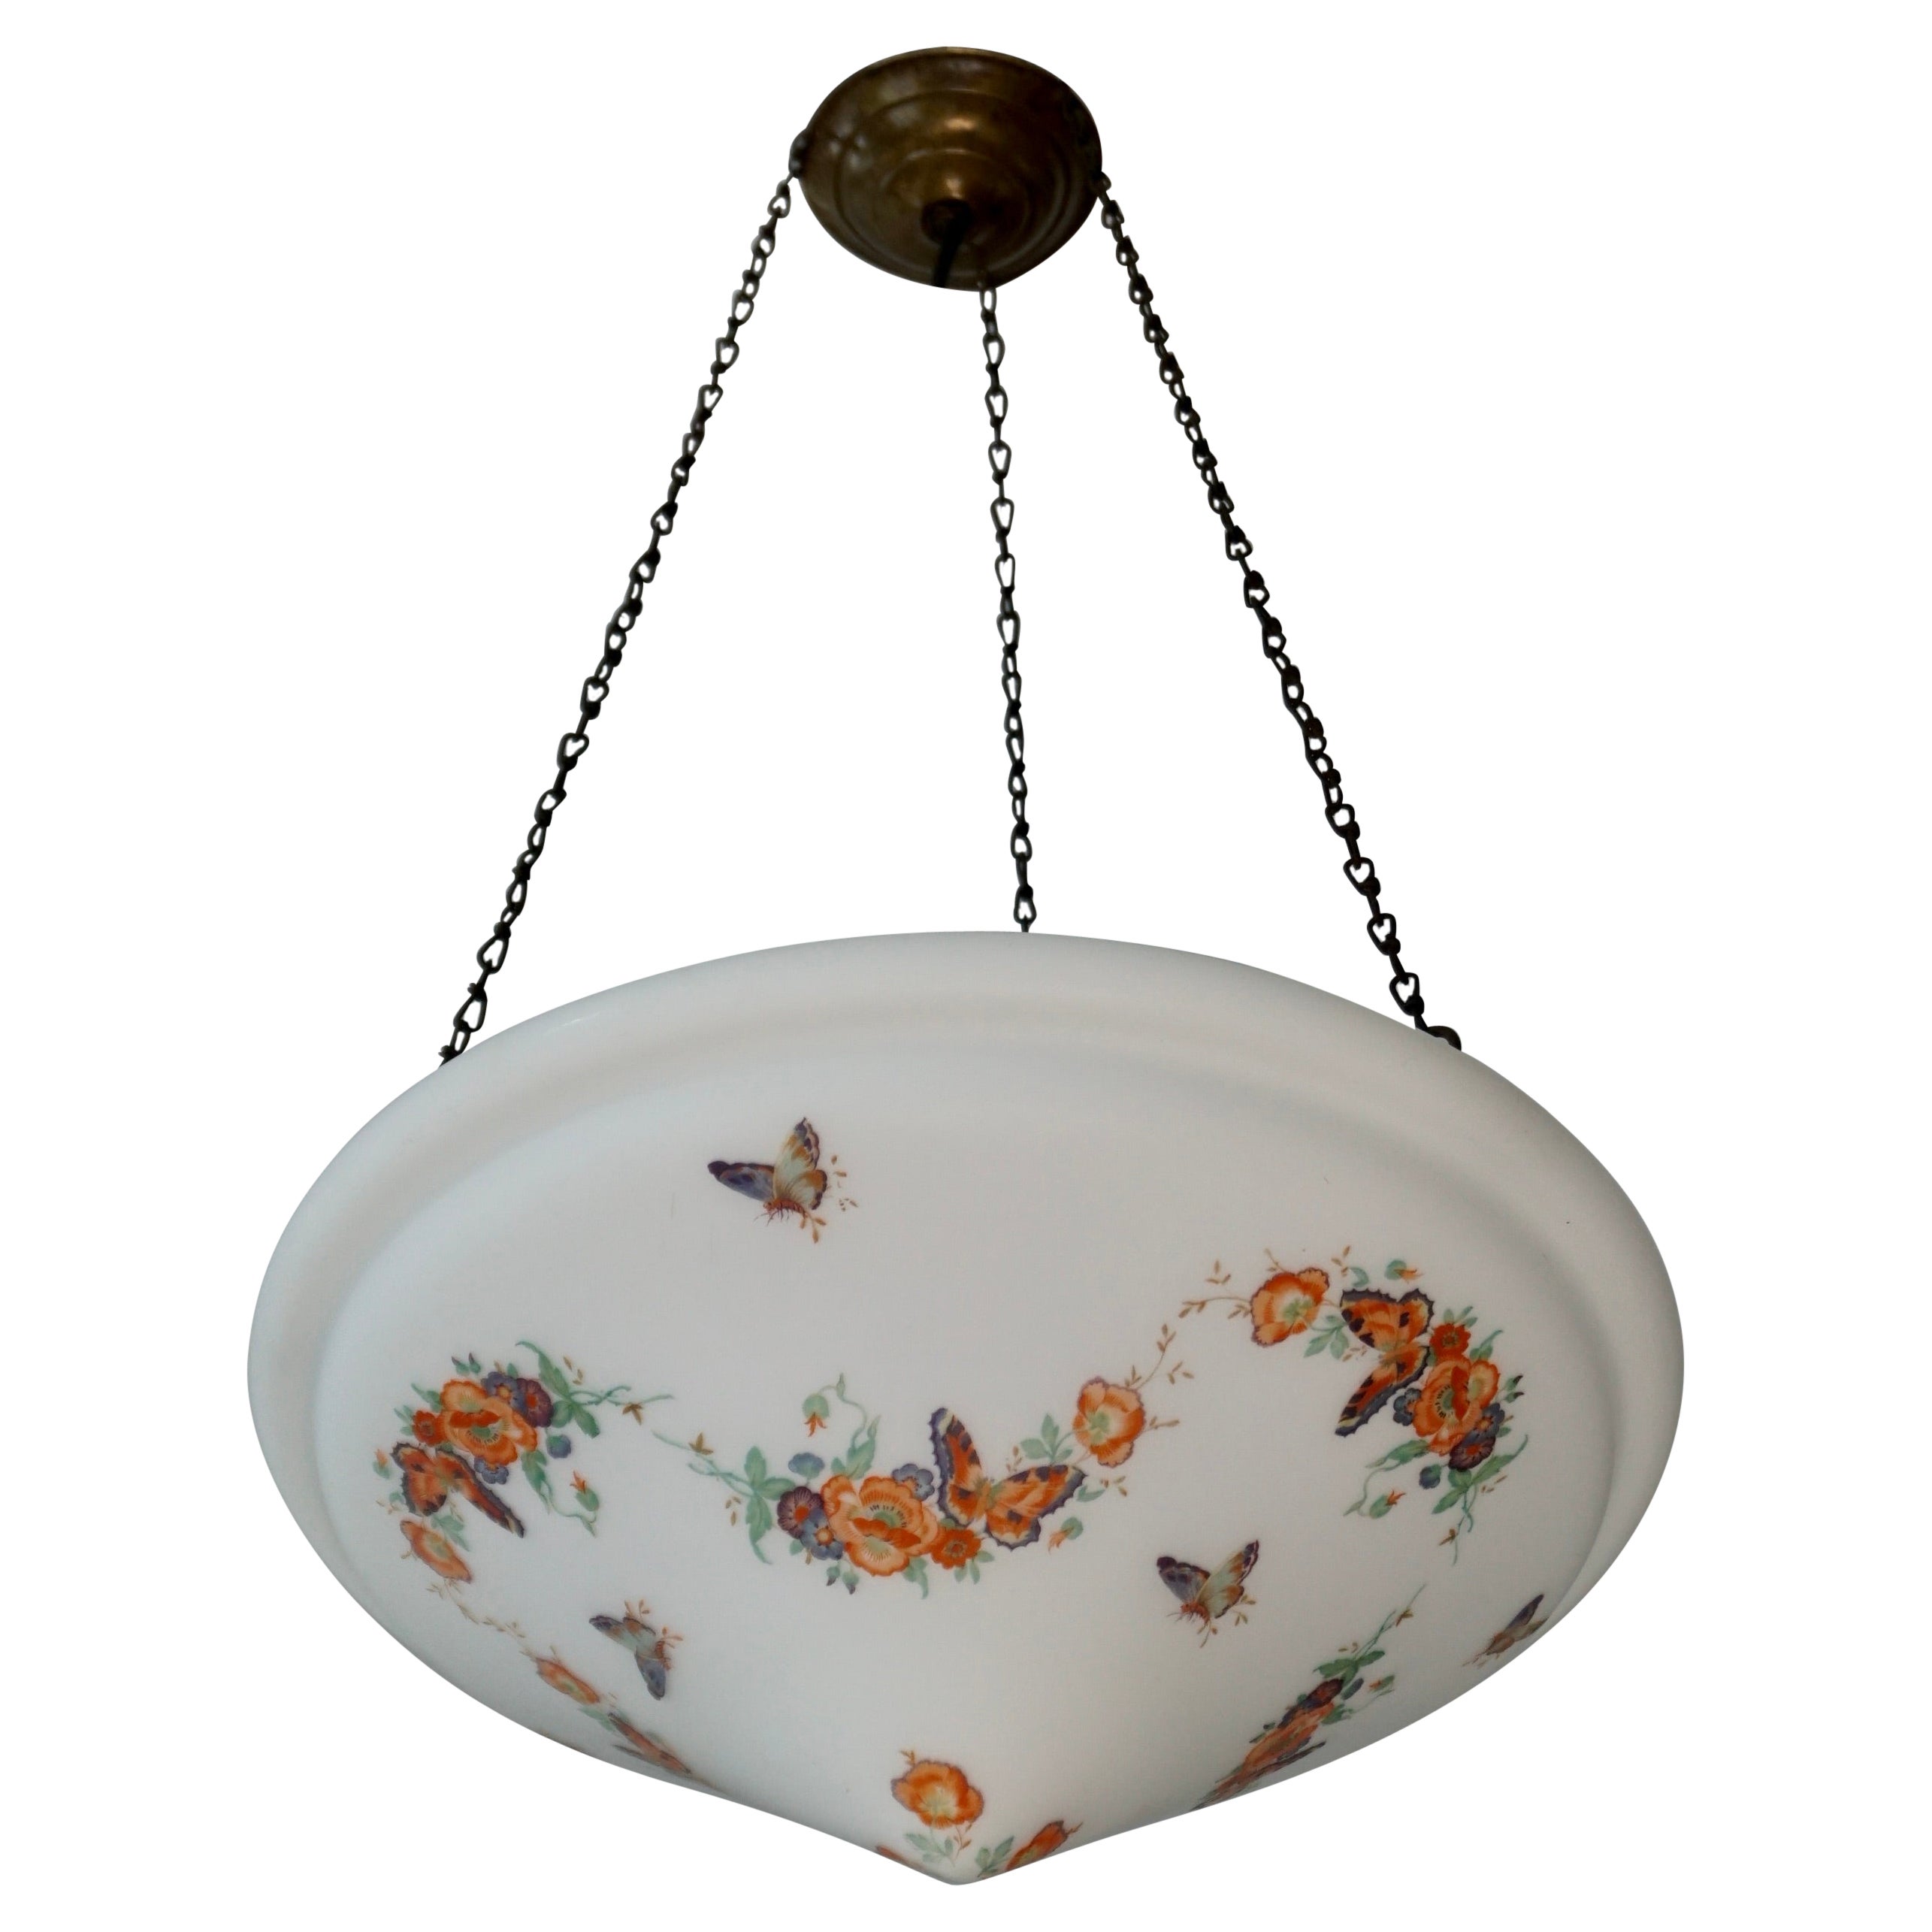 Art Deco Pendant Light with Floral Motifs and Butterflies